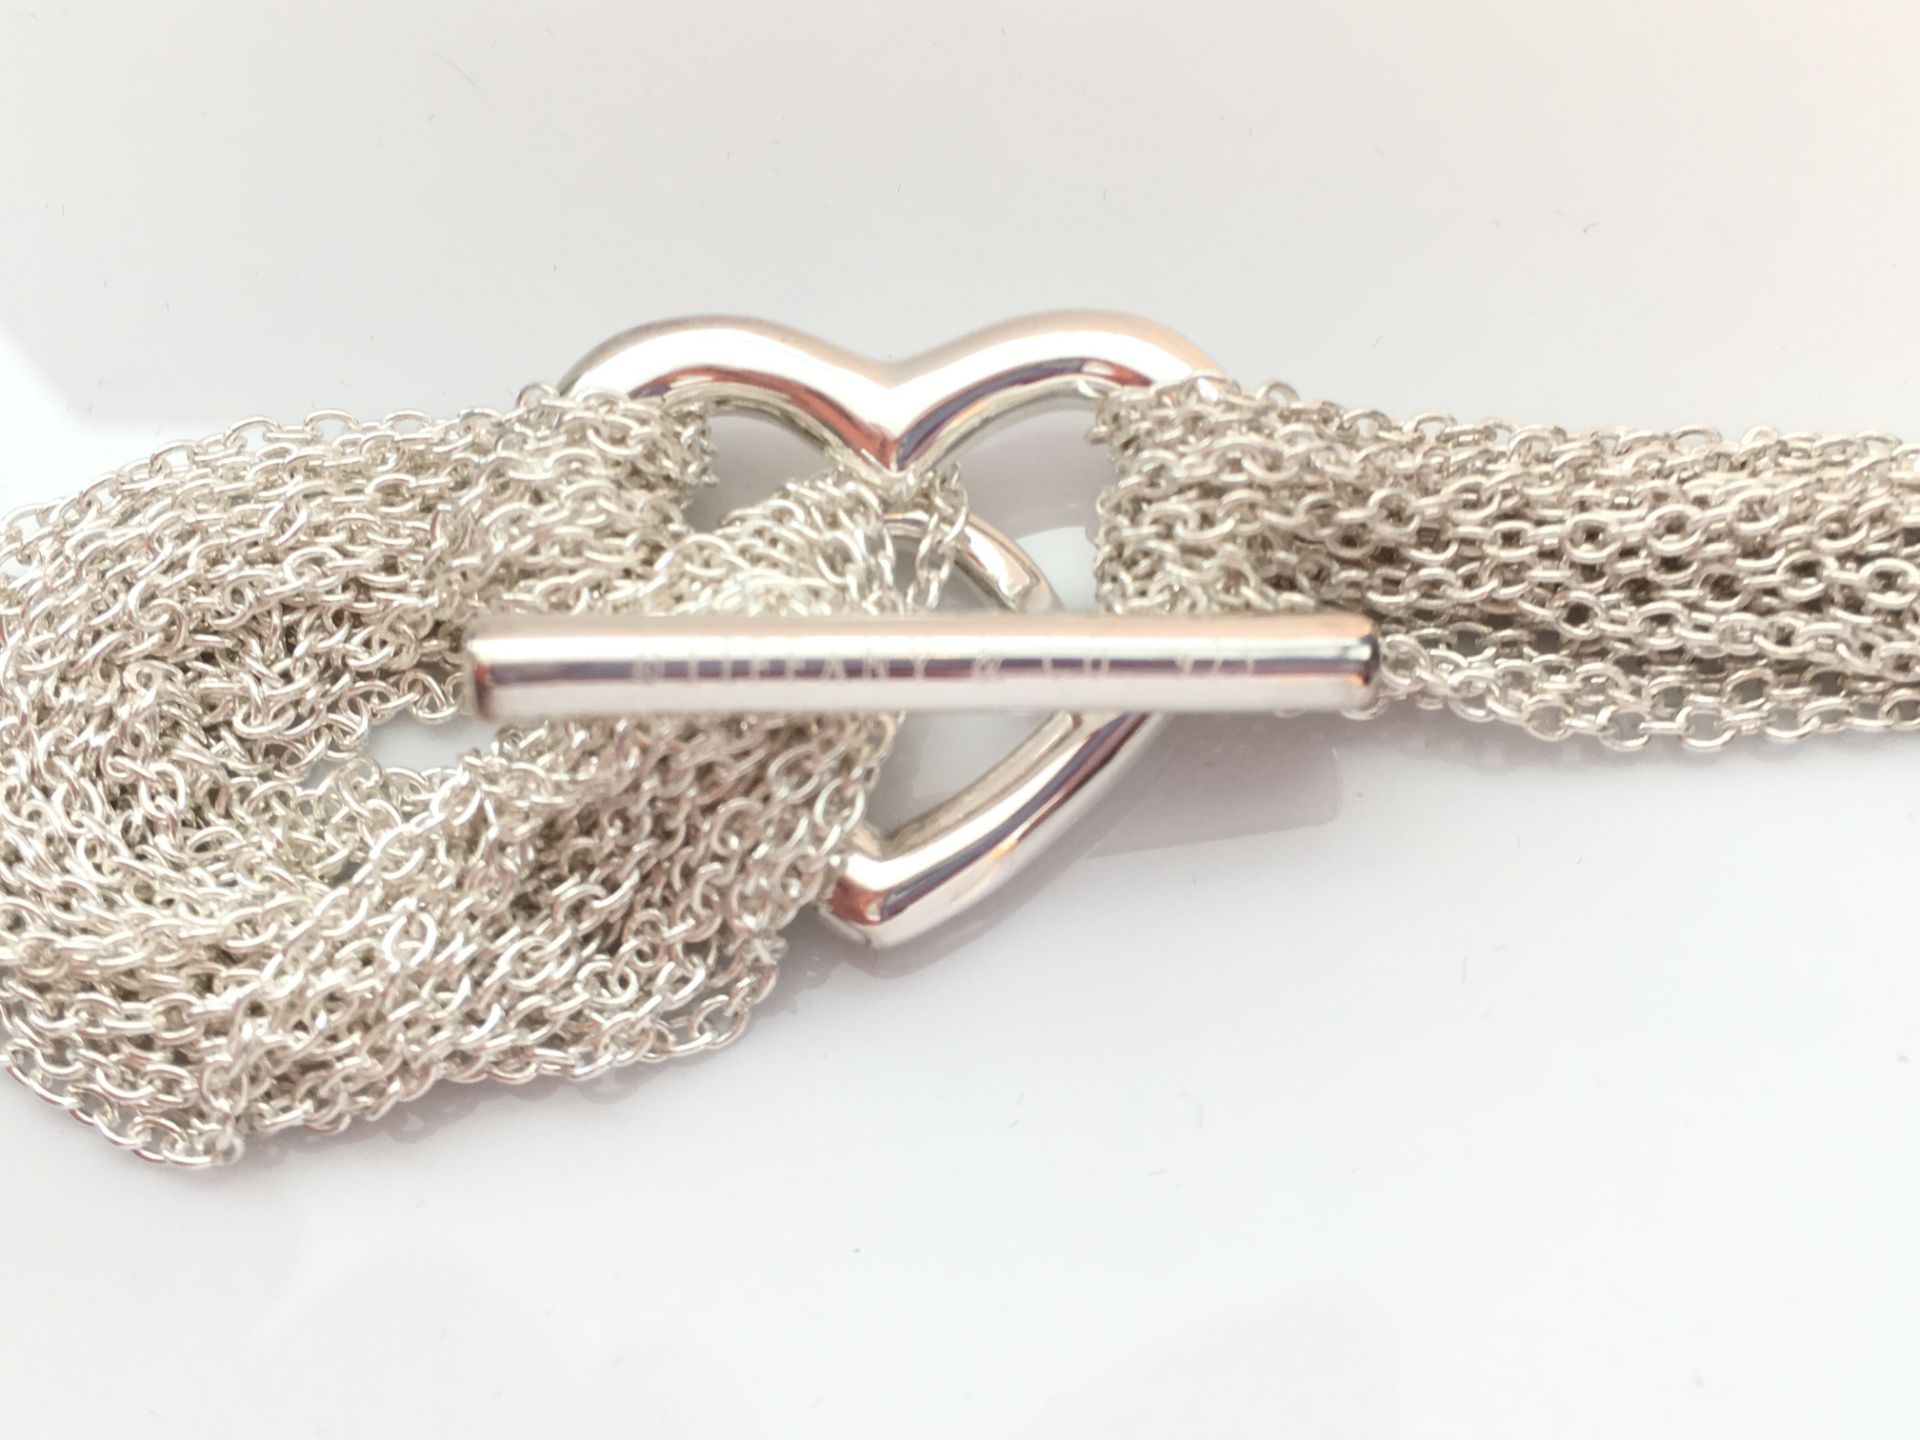 Tiffany Heart shaped Bracelet with bag - Image 2 of 4